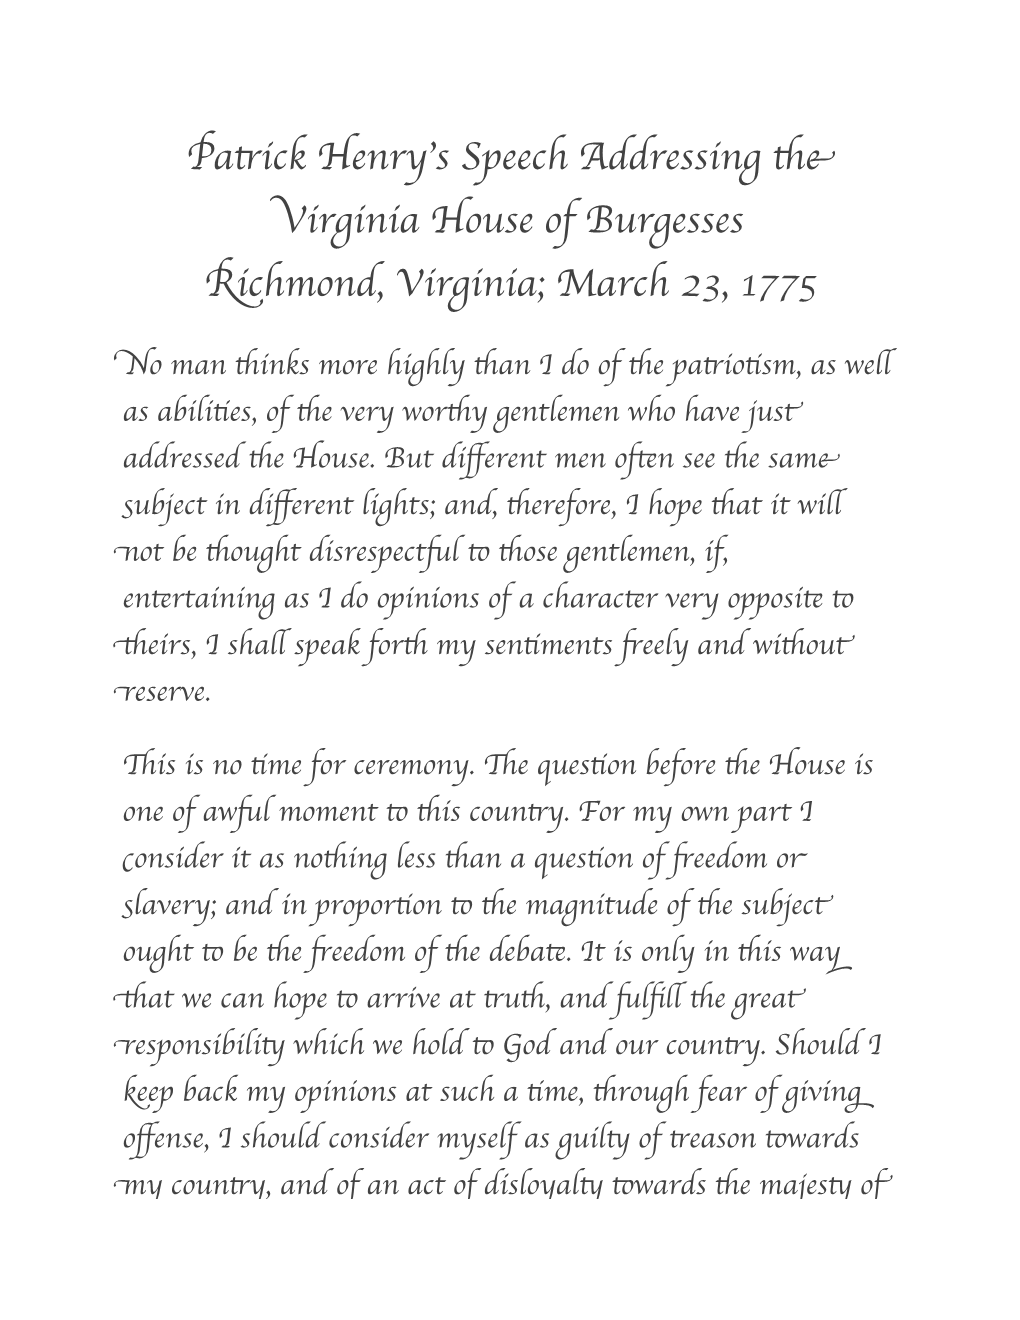 Patrick Henry's Speech Addressing the Virginia House of Burgesses